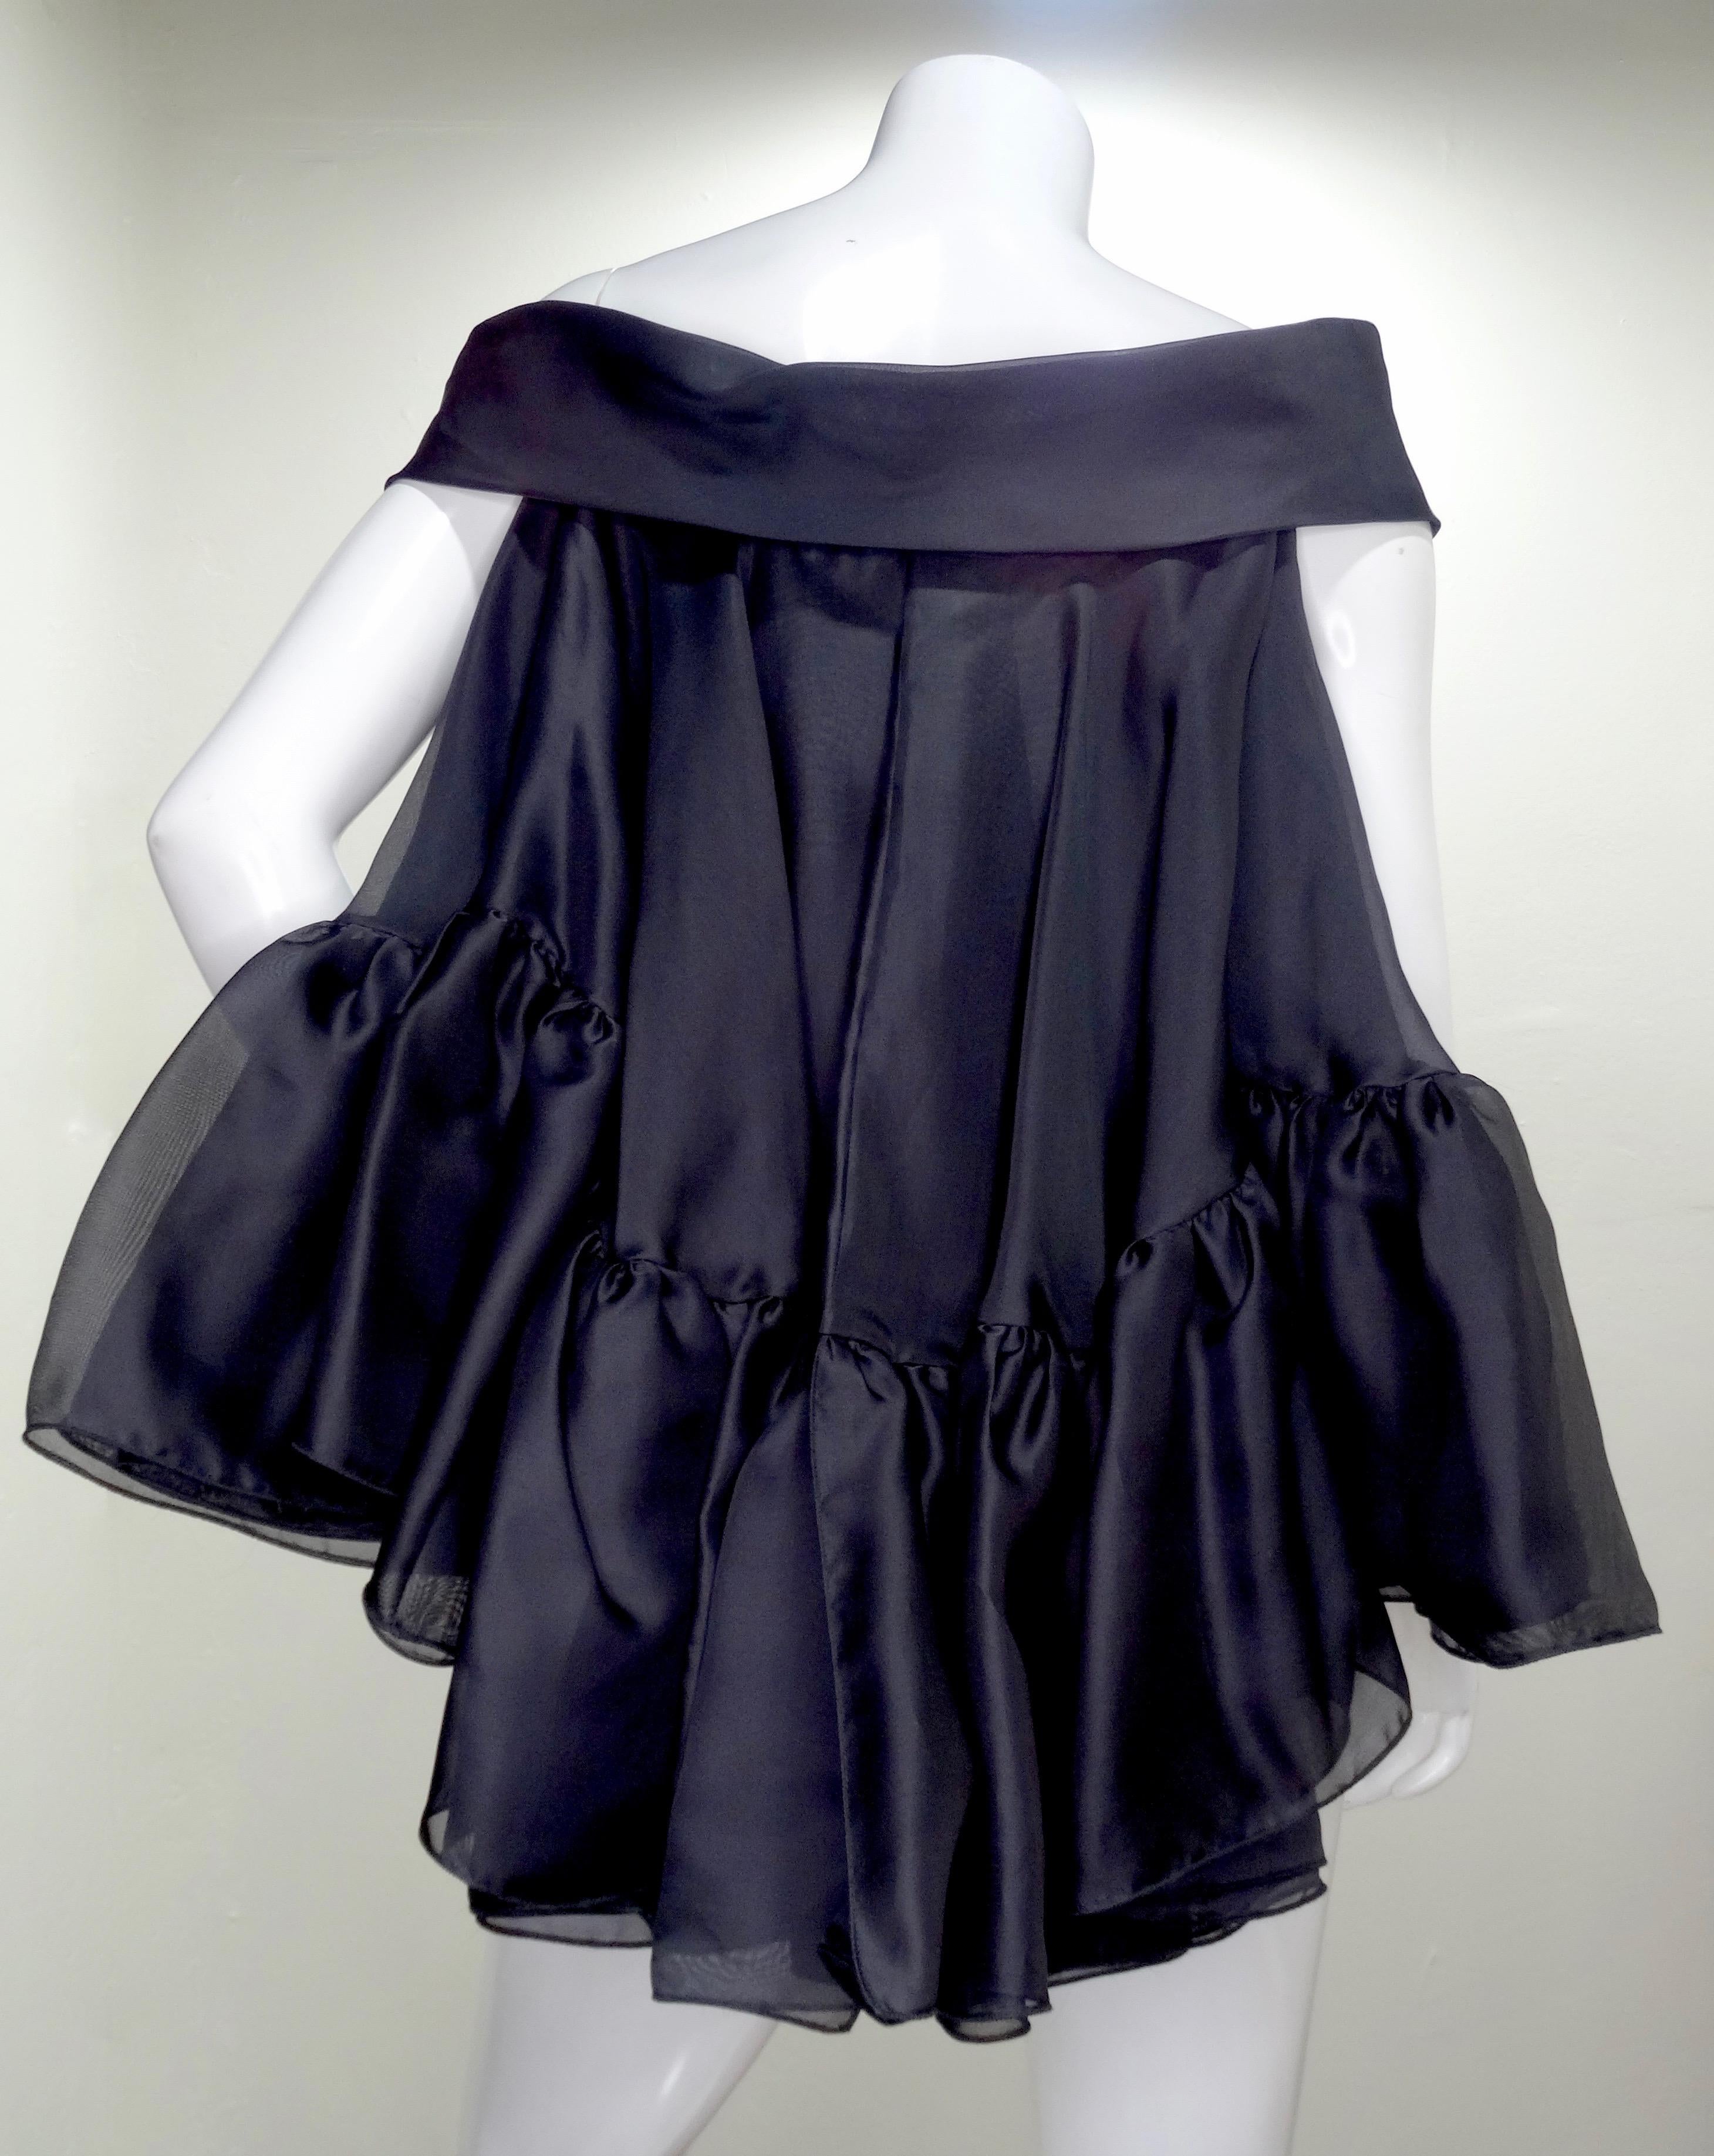 Christian Dior 1990s Peplum Silk Blouse designed by Gianfranco Ferré  1